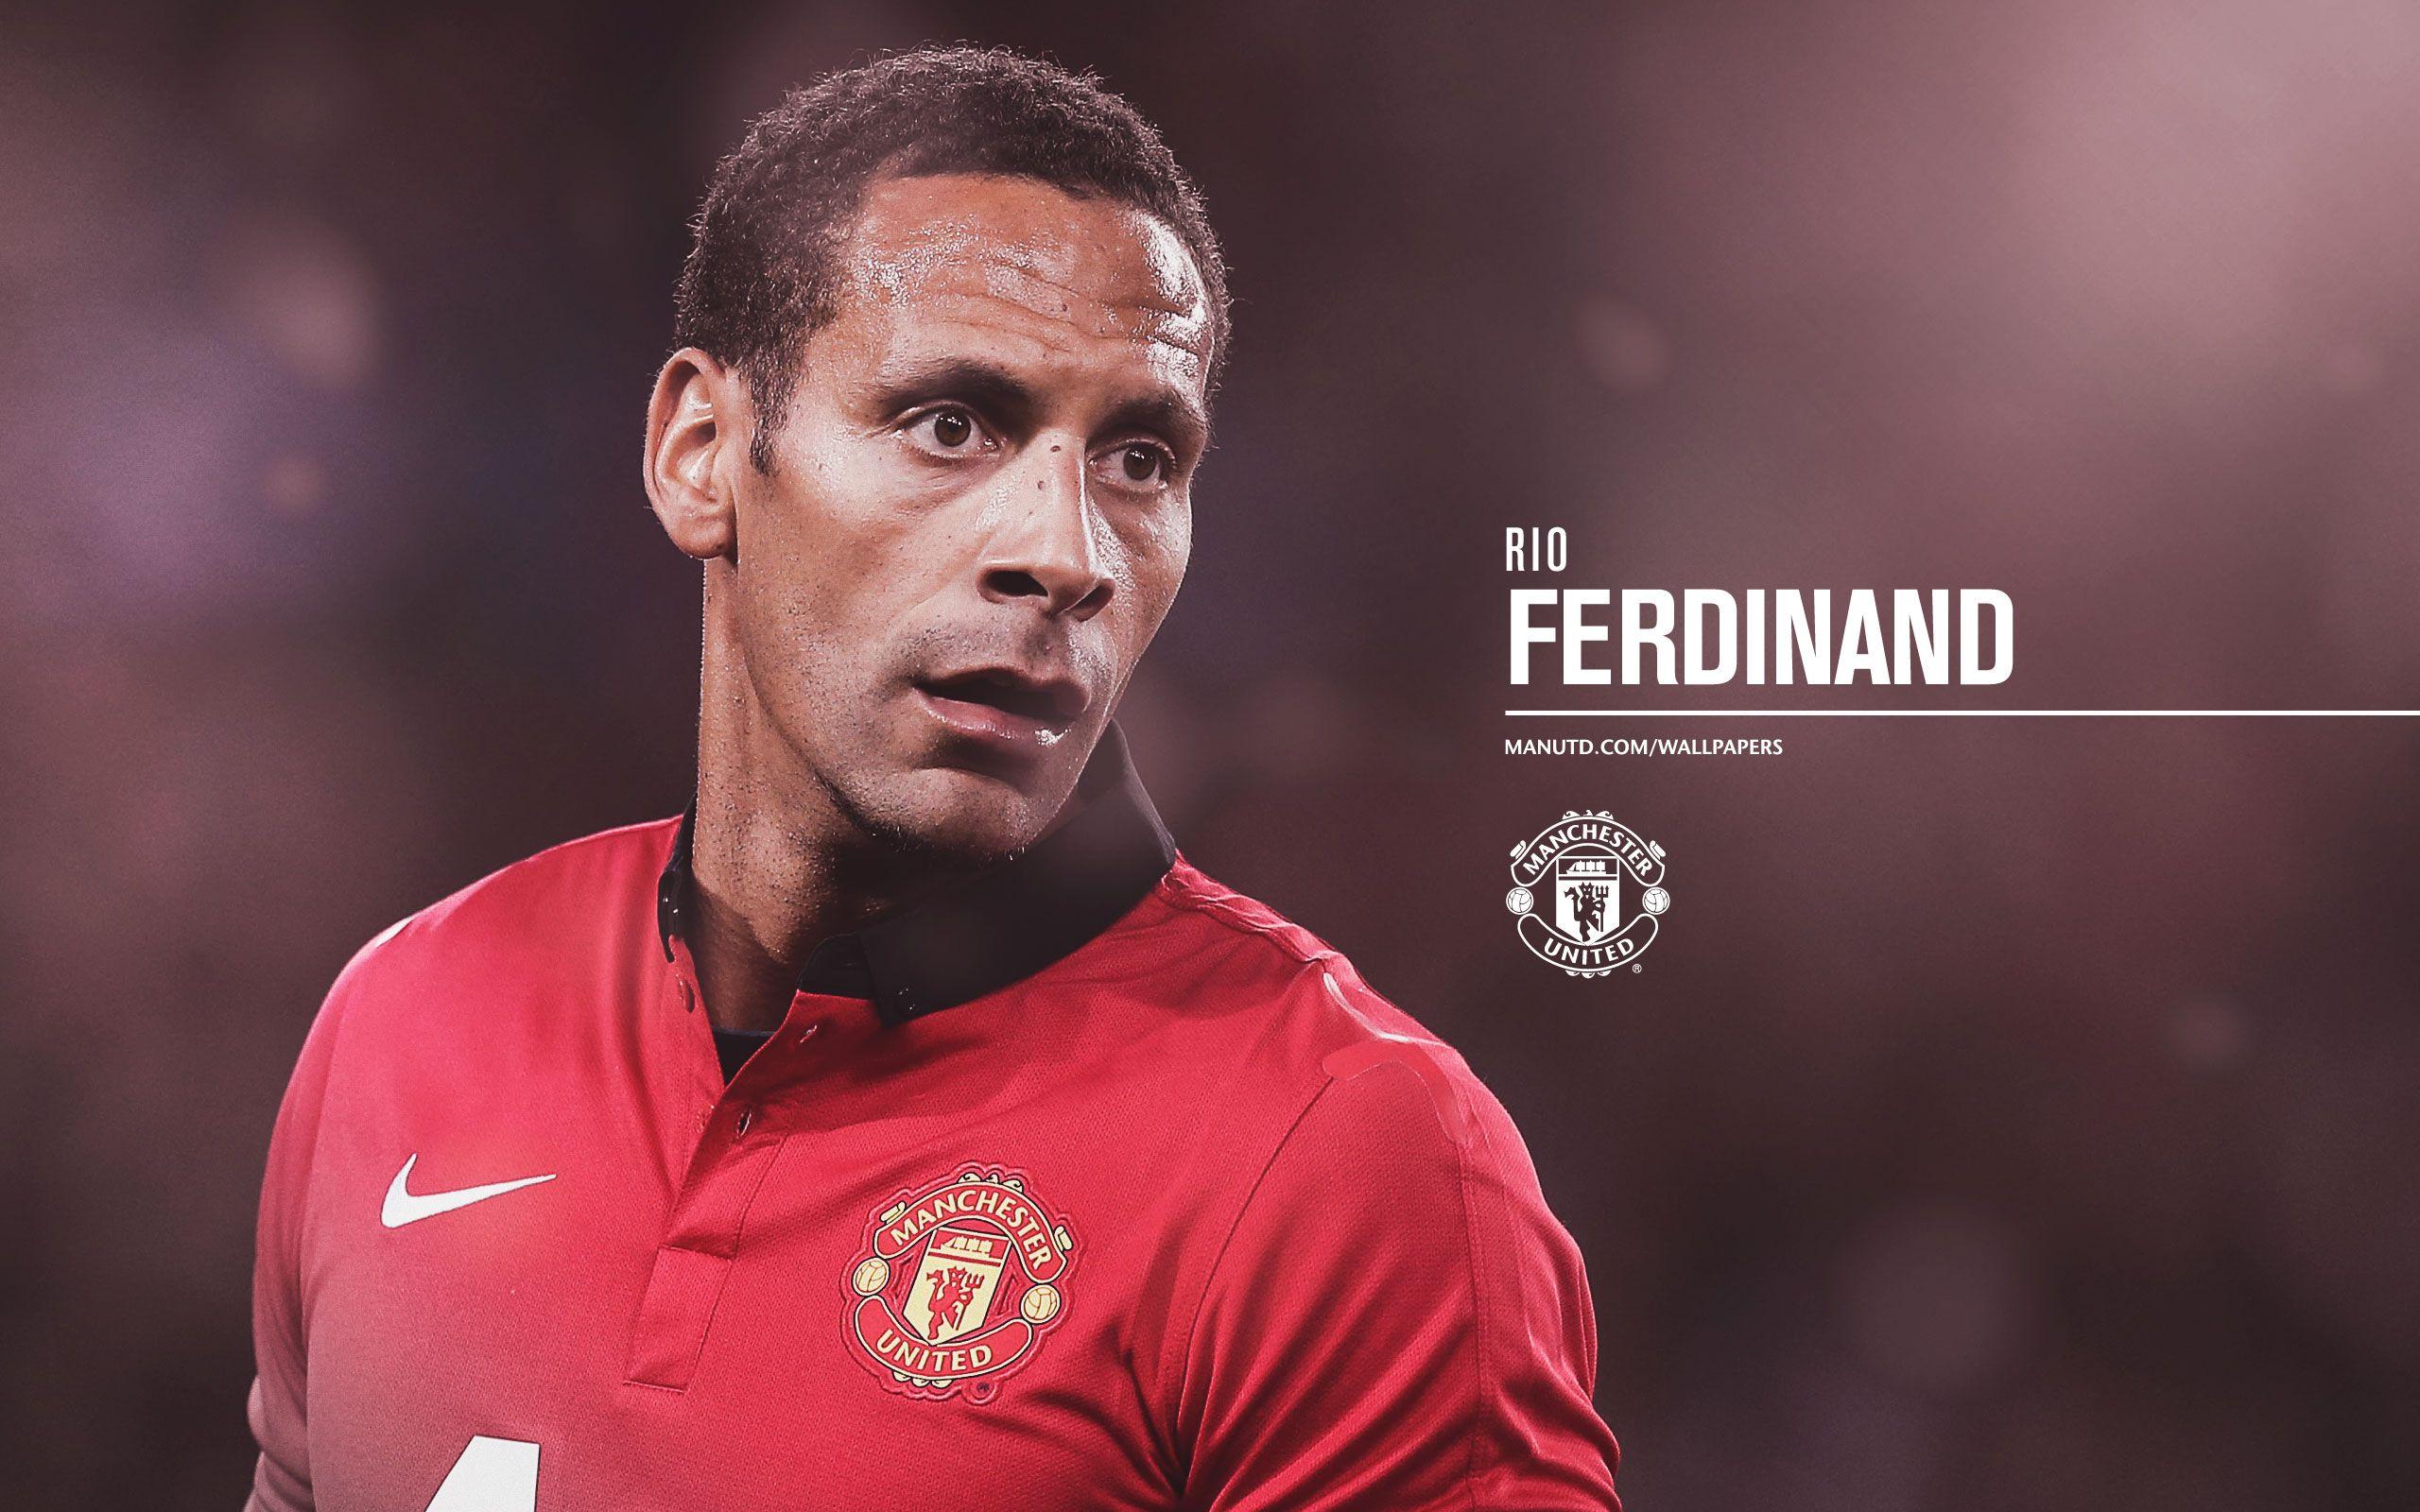 Rio Ferdinand Manchester United Player Wallpaper